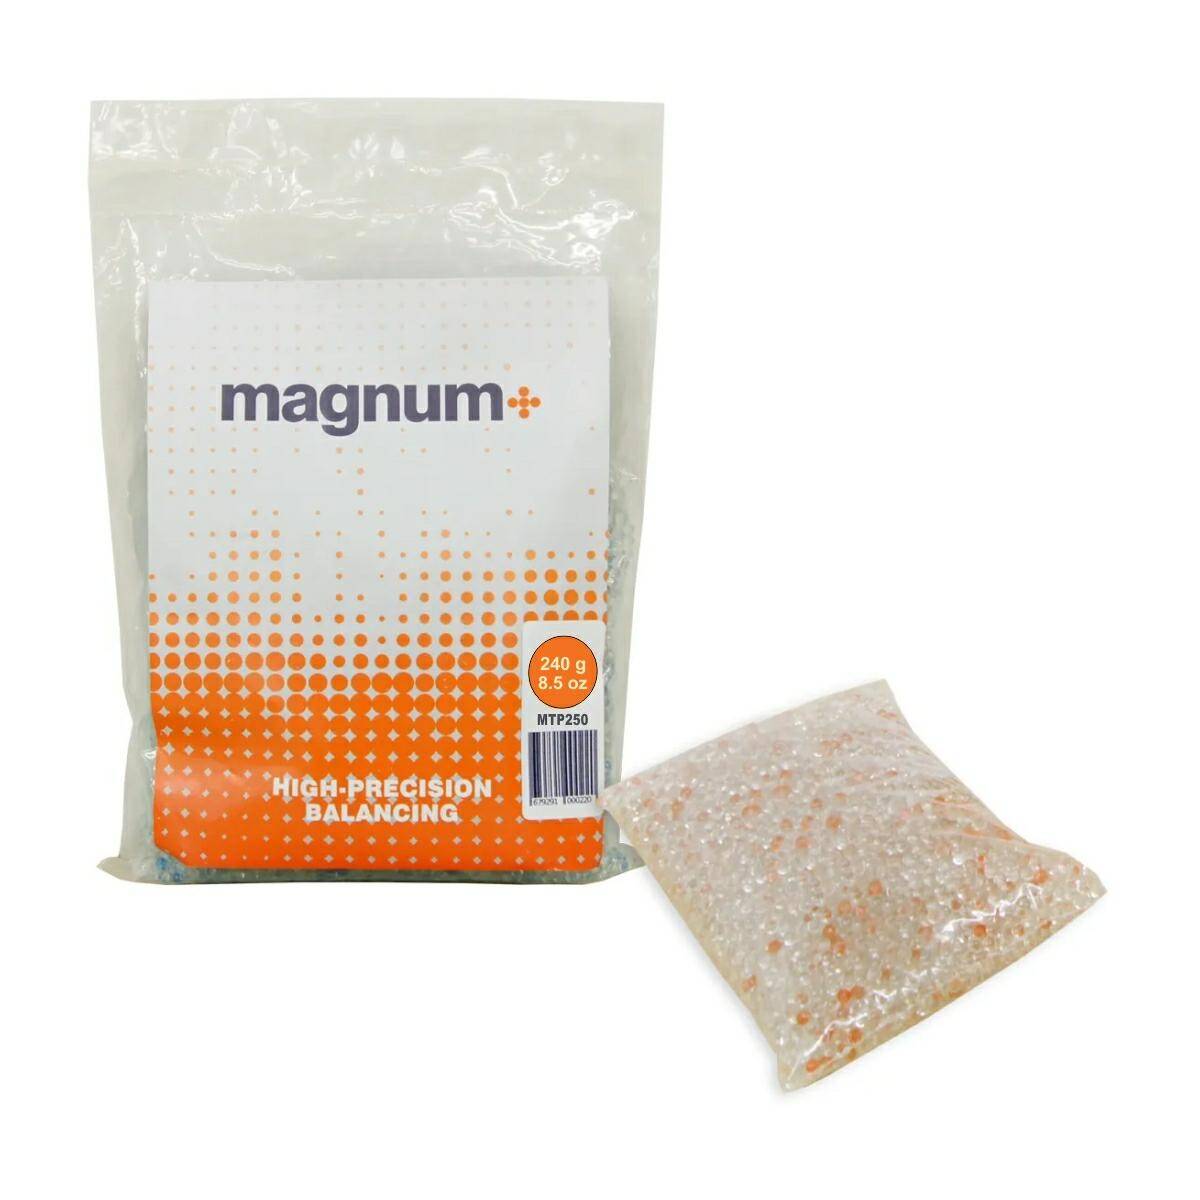 Magnum Plus Balance Powder 240 g (T-LTP250)